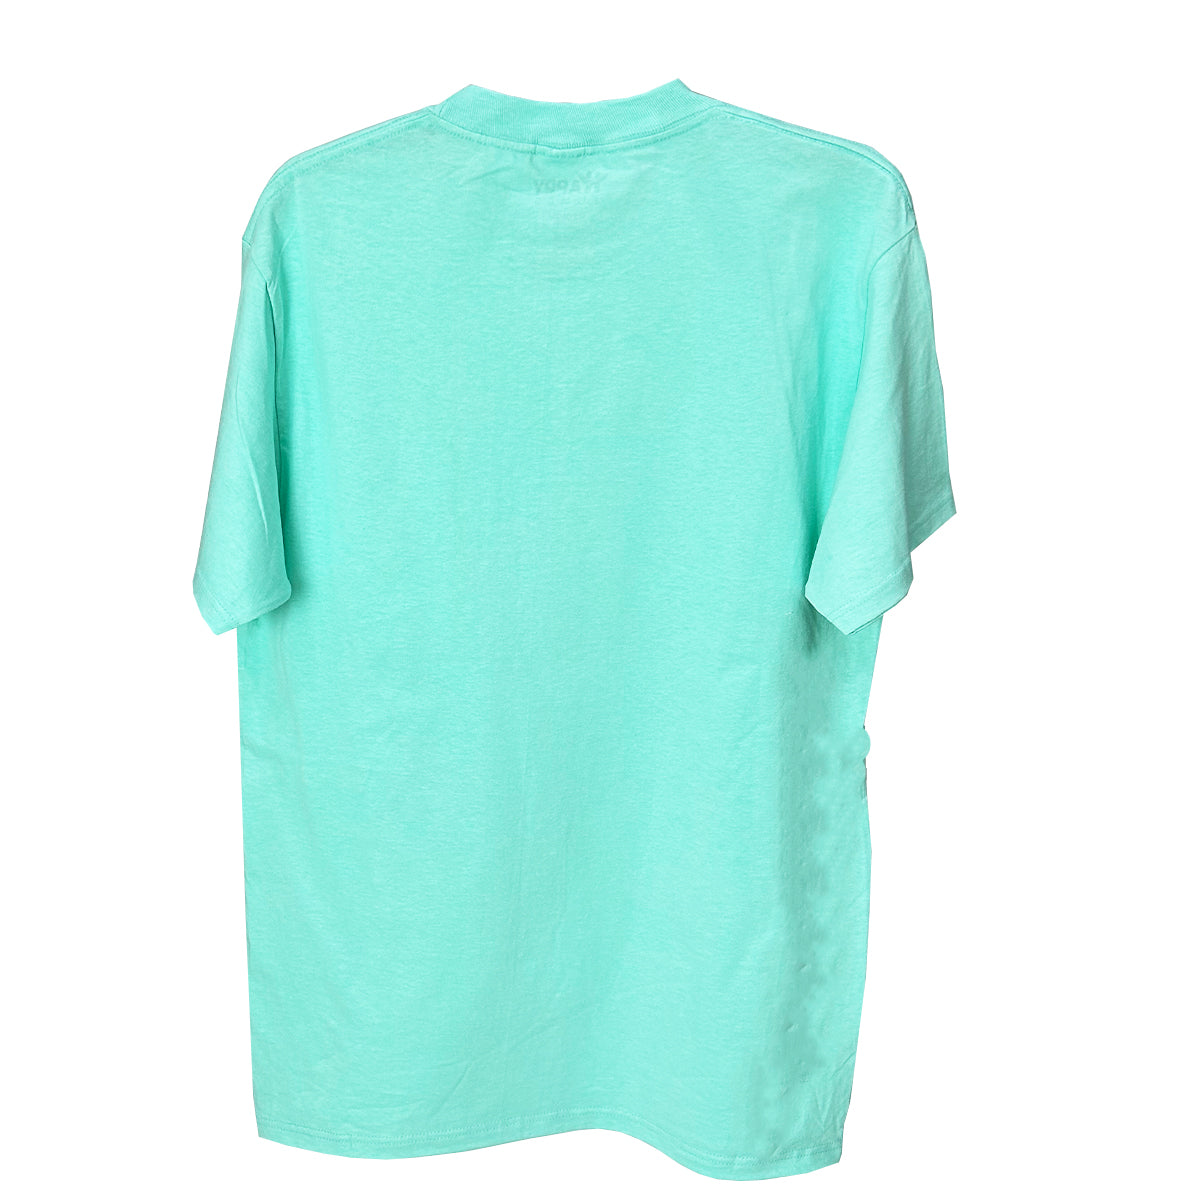 Rich Gang Teal Short Sleeve T-Shirt - Pack of 6 Units  1S, 2M, 2L, 1XL